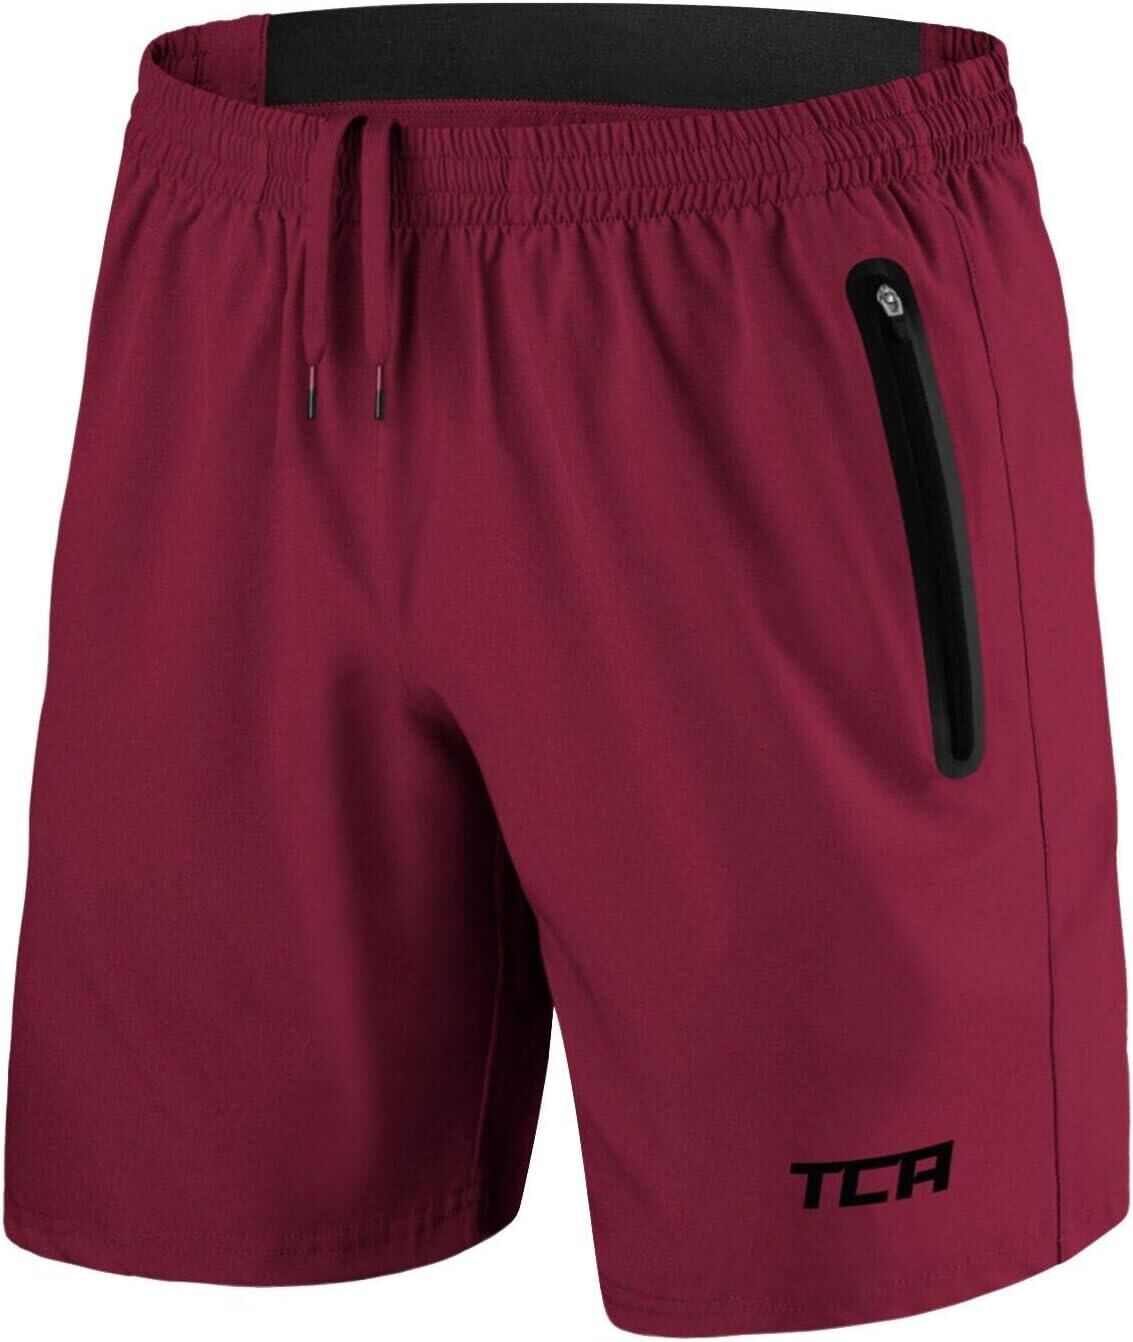 TCA Men's Elite Tech Lightweight Running Shorts with Zip Pockets - Carmine Red